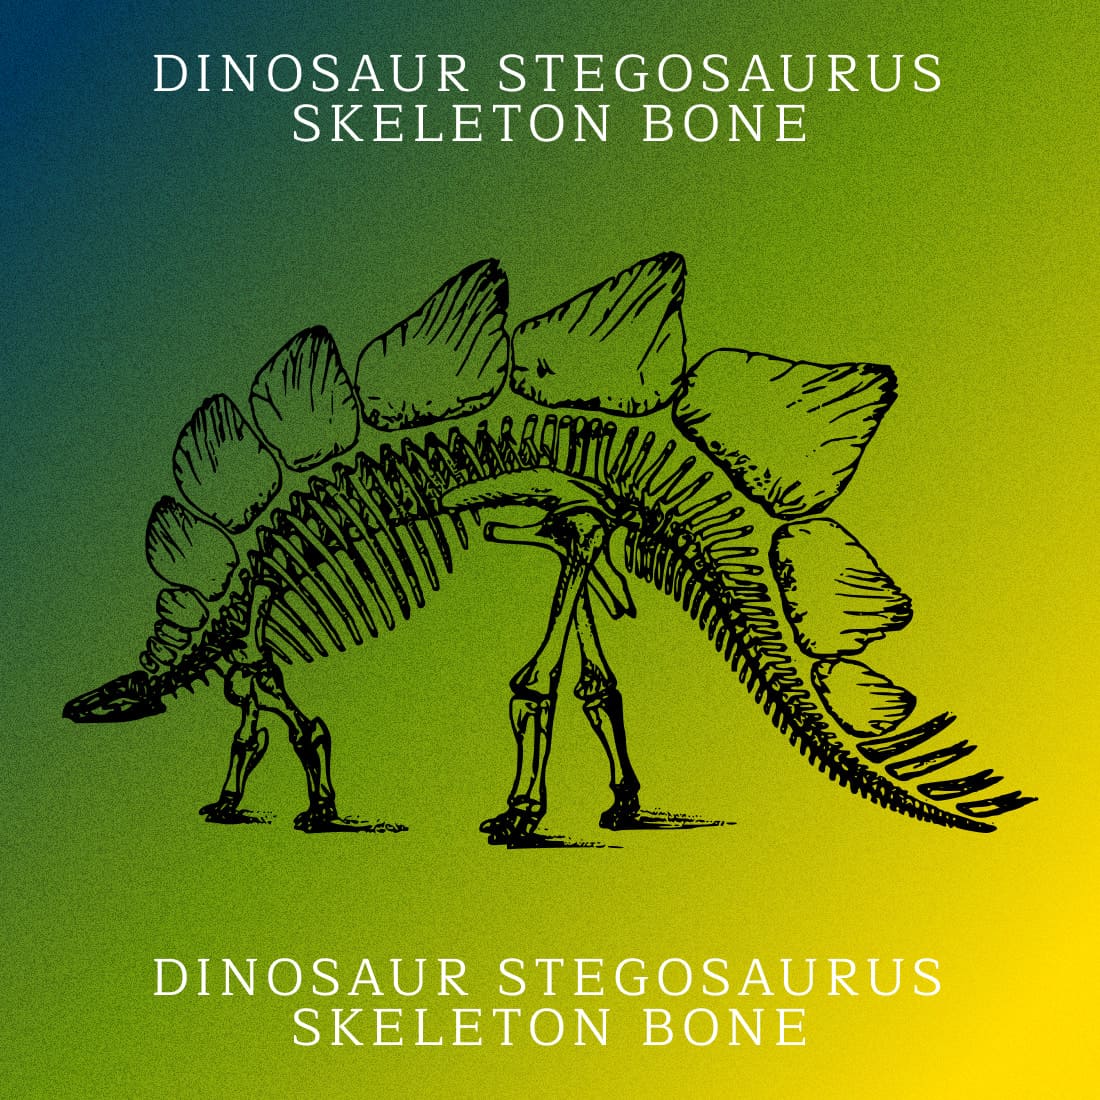 Dinosaur Stegosaurus Skeleton Bone - Green Colorful Example.